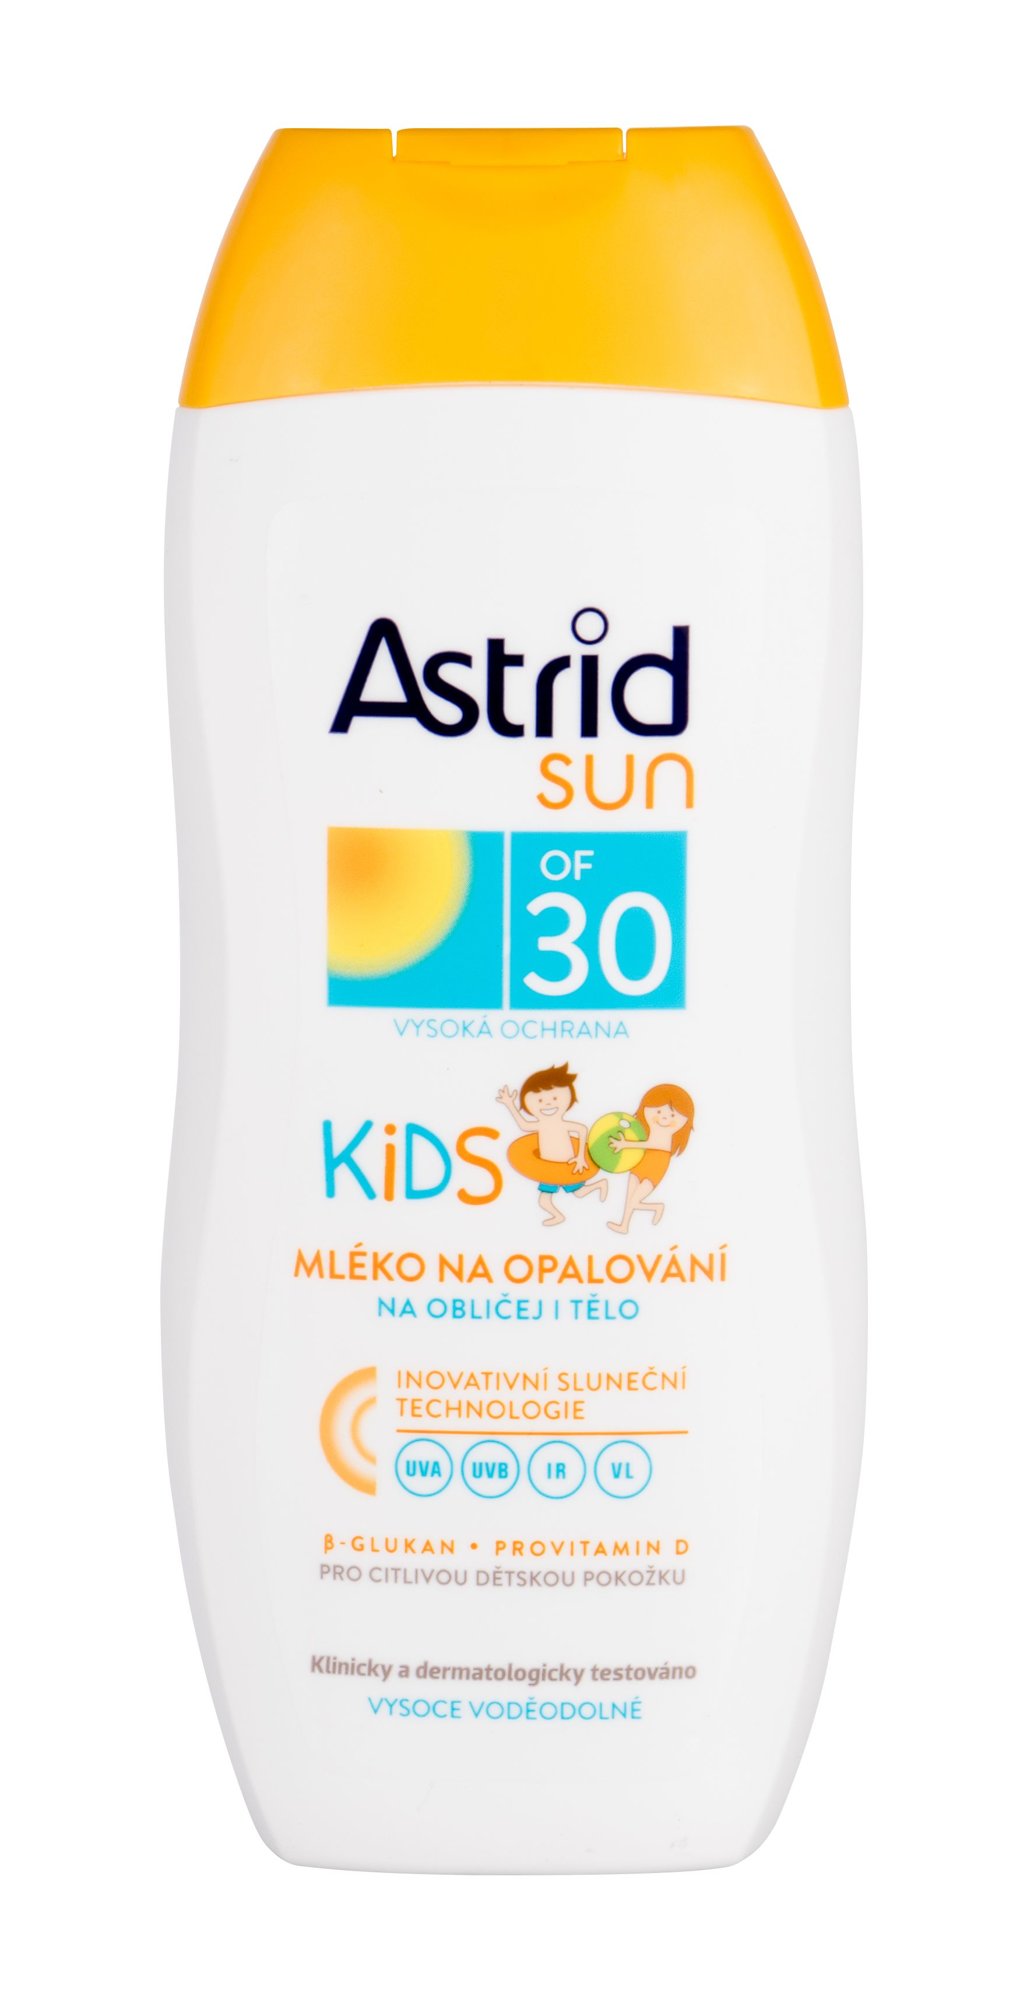 Astrid Sun Kids Face and Body Lotion įdegio losjonas